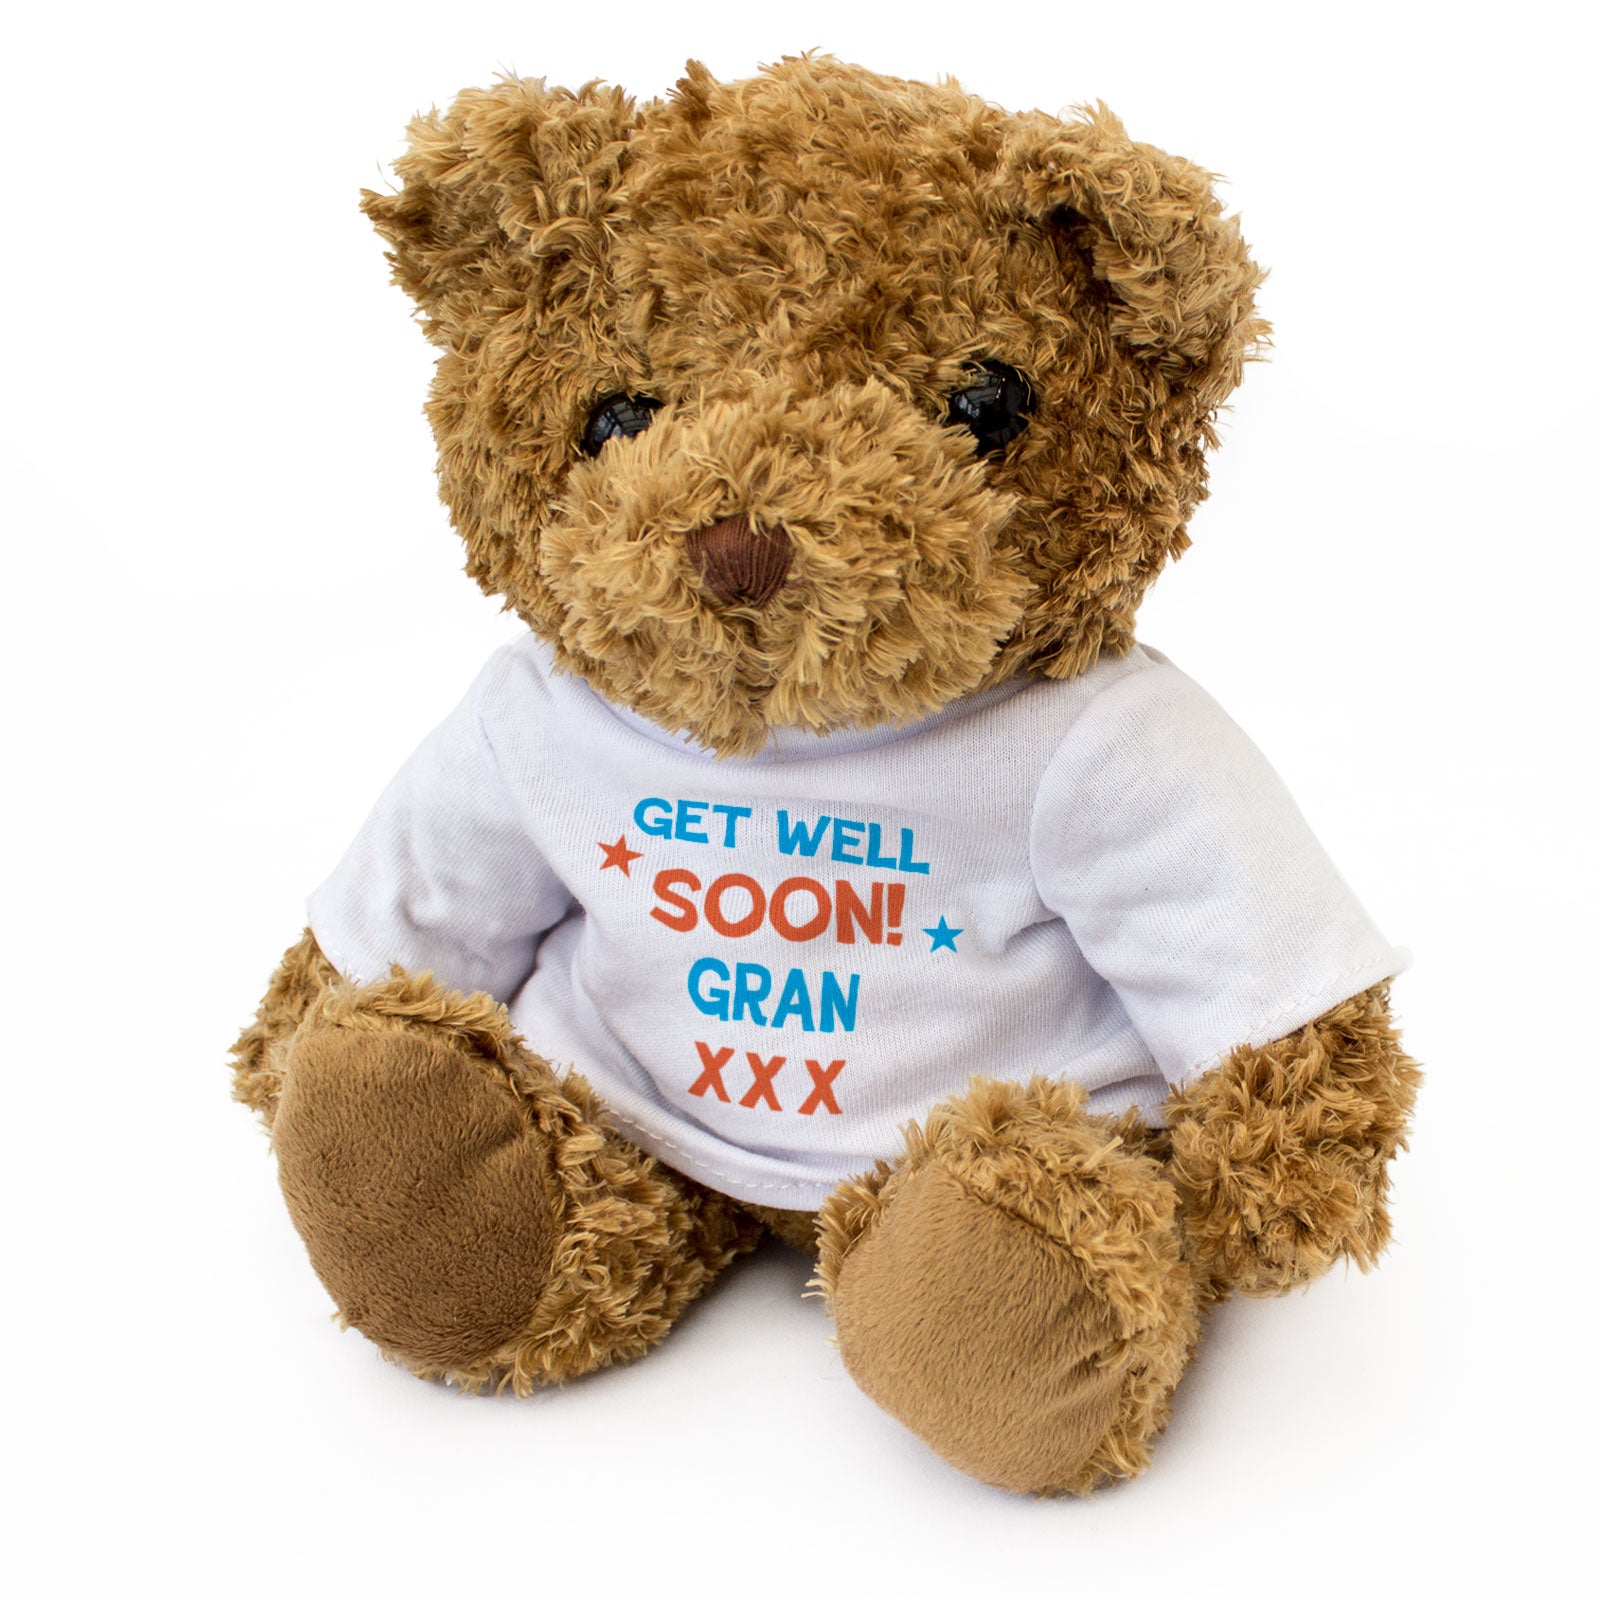 Get Well Soon Gran - Teddy Bear